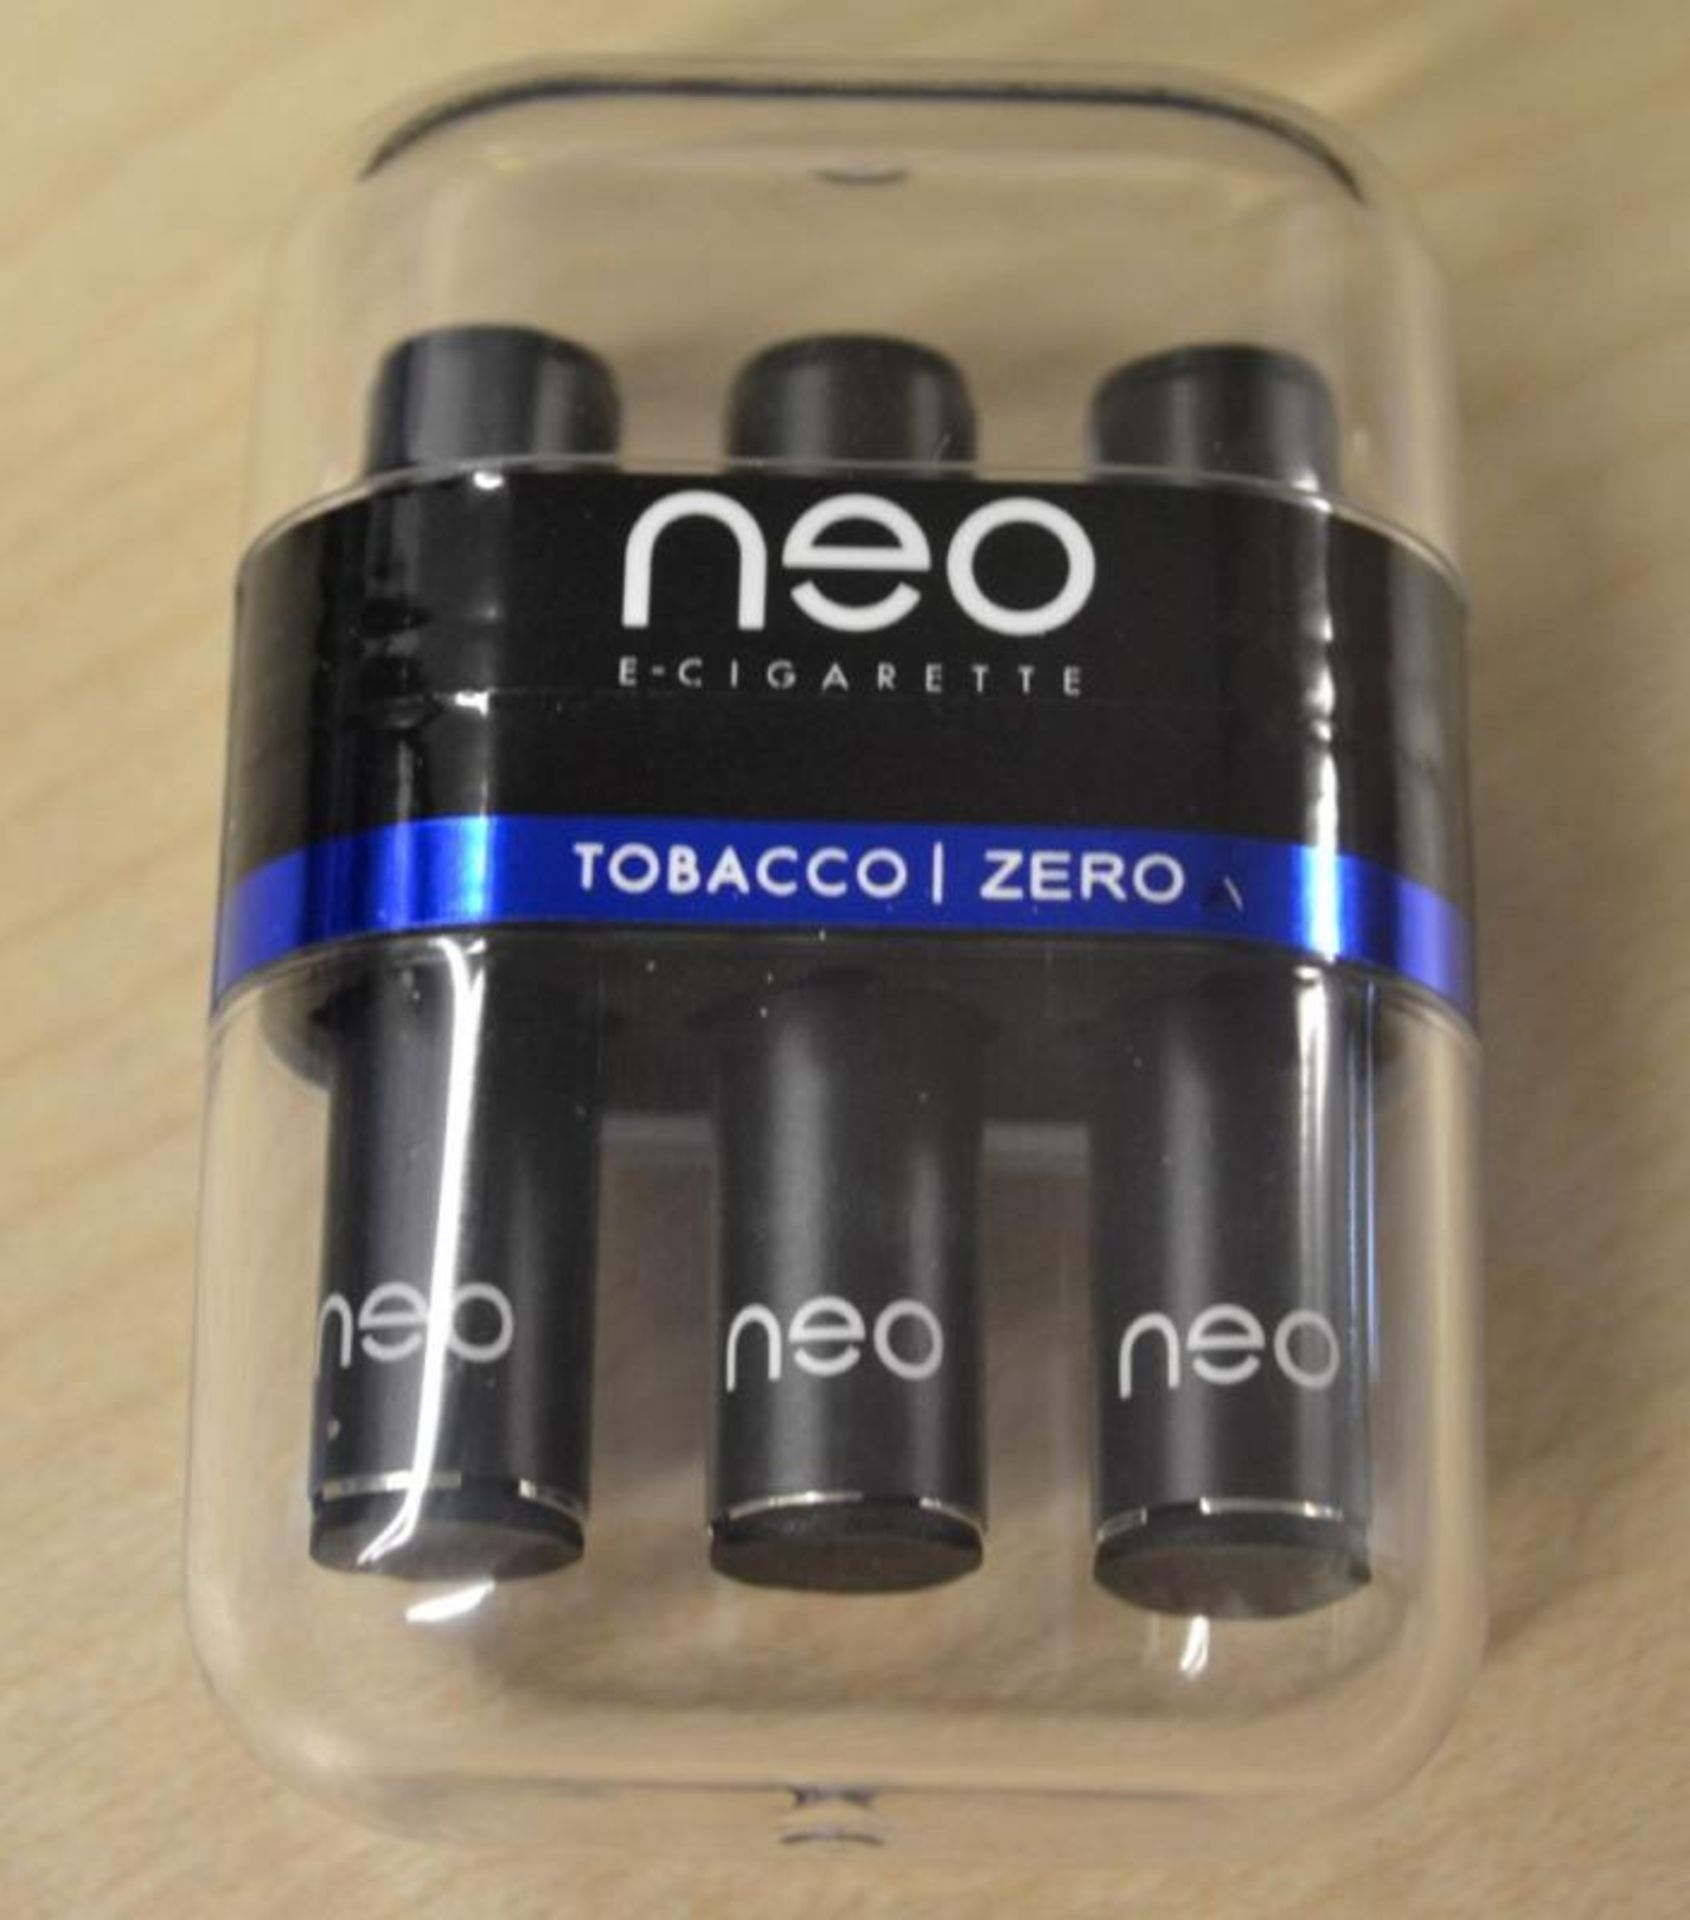 30 x Neo E-Cigarettes Neo Infinity Tobacco Zero Refill Packs - New & Sealed Stock - CL185 - Ref: DRT - Image 8 of 9